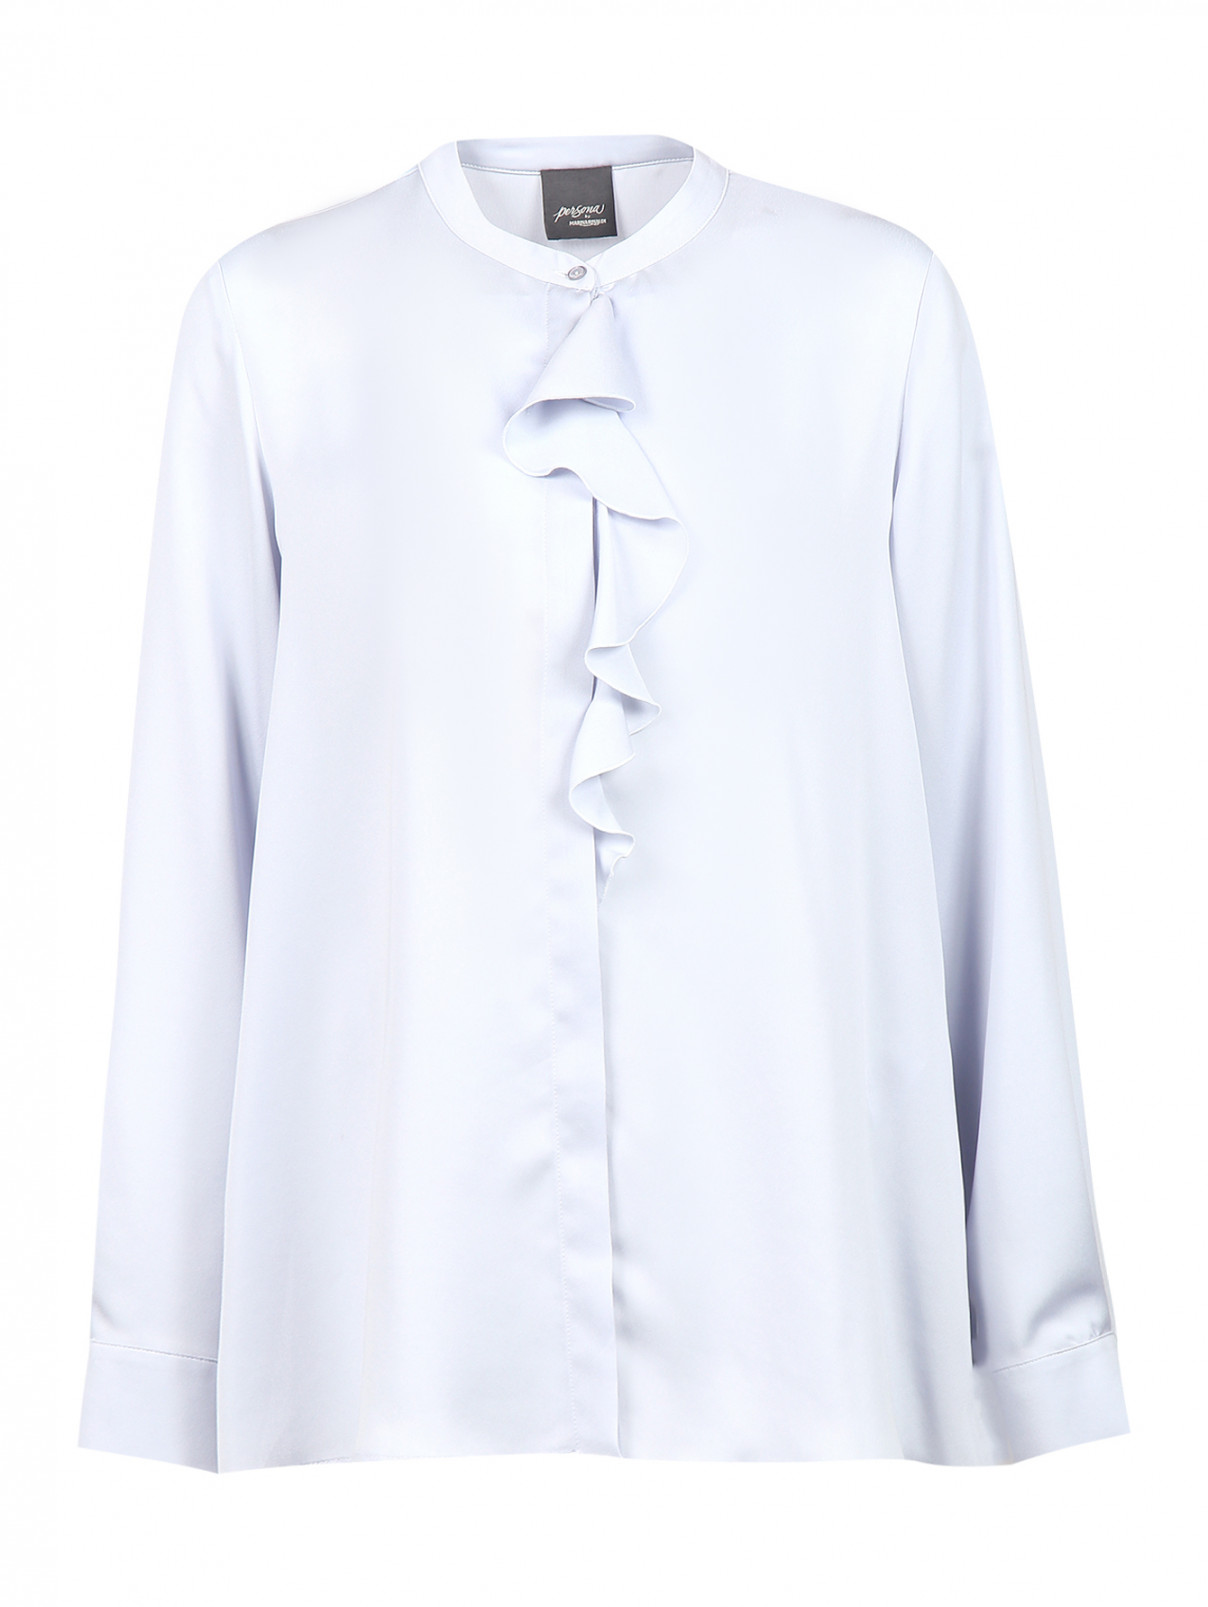 Блуза с декоративной рюшей Persona by Marina Rinaldi  –  Общий вид  – Цвет:  Синий